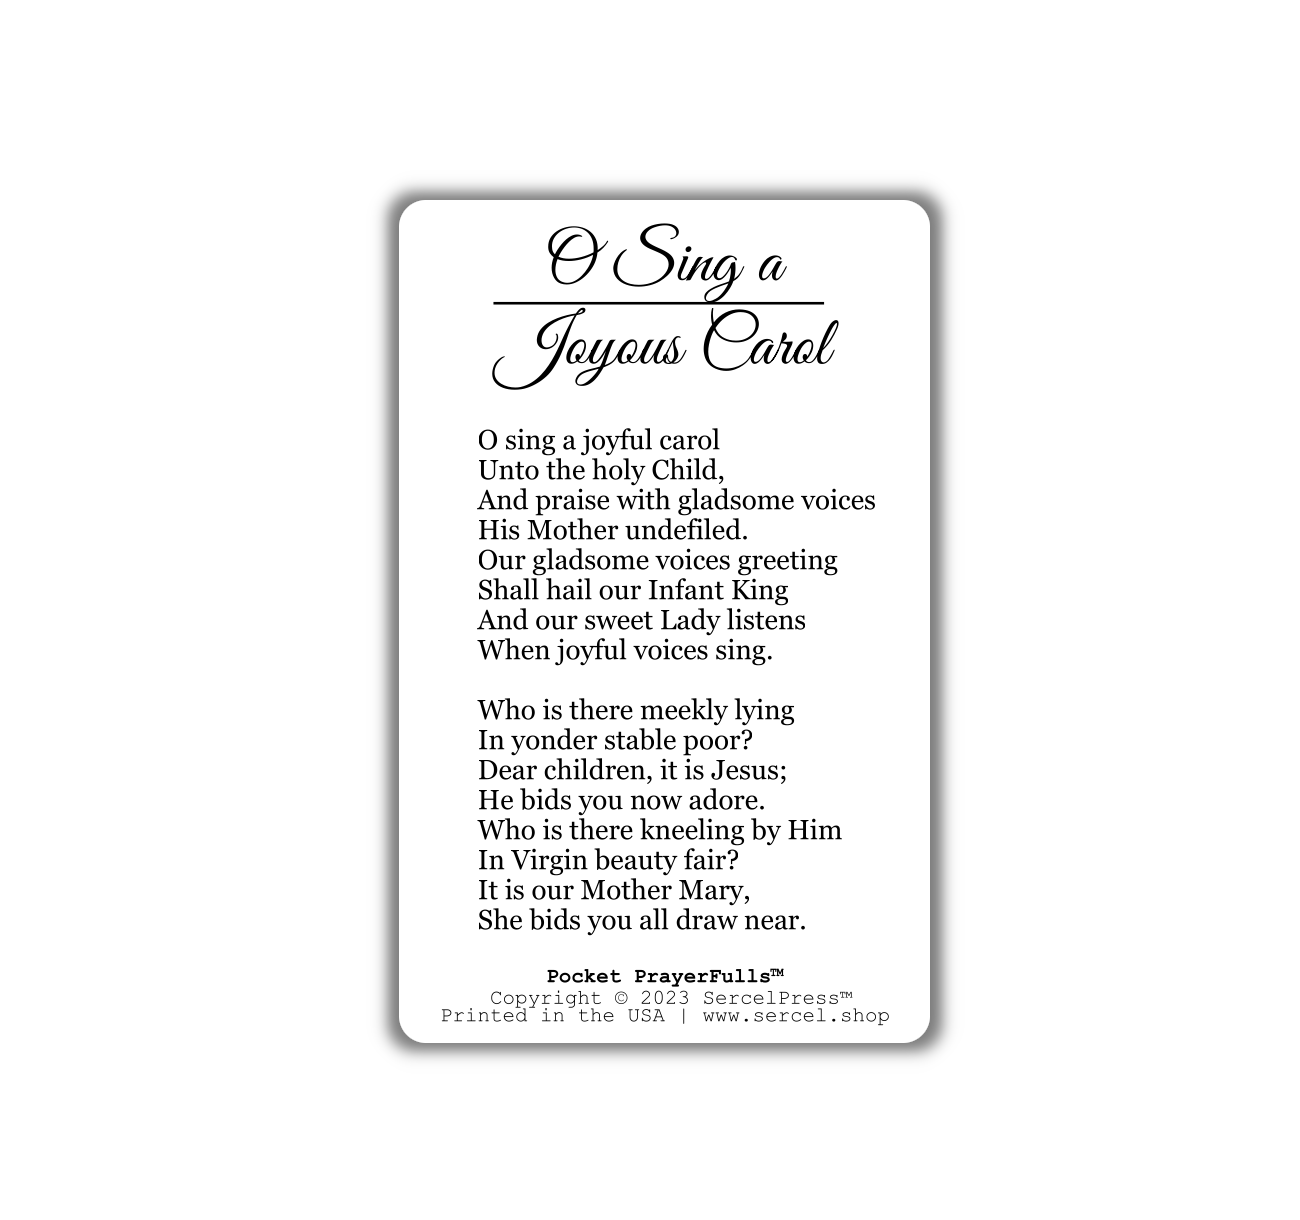 O Sing a Joyous Carol: Pocket PrayerFulls™ | Durable Wallet Prayer Cards | Advent, Christmas, Nativity Gift | Catholic Hymns